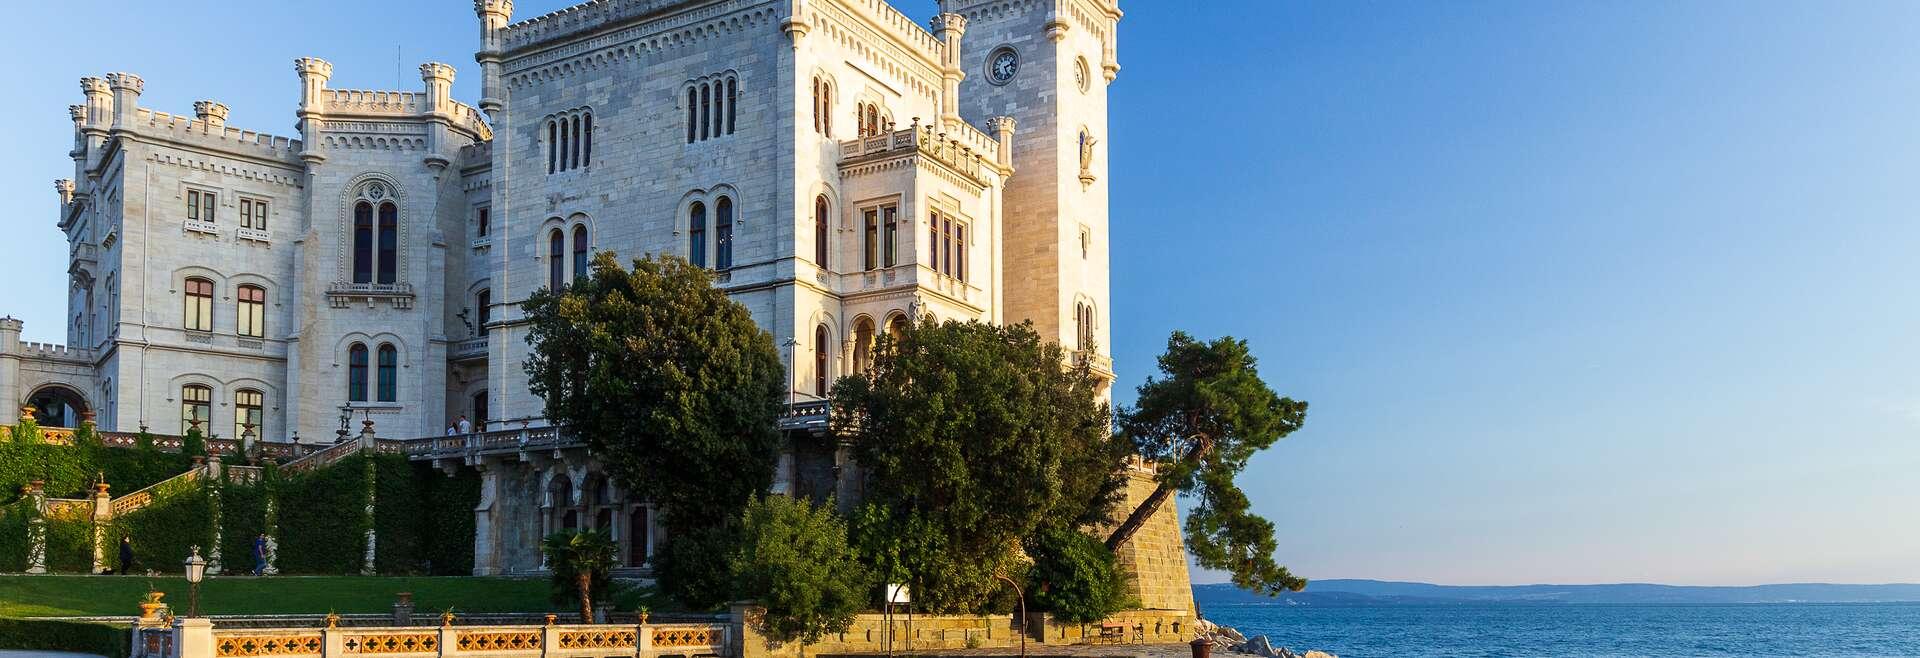 Séjour linguistique Italie, Trieste - At The Teachers Home HLI Trieste - Château Miramare